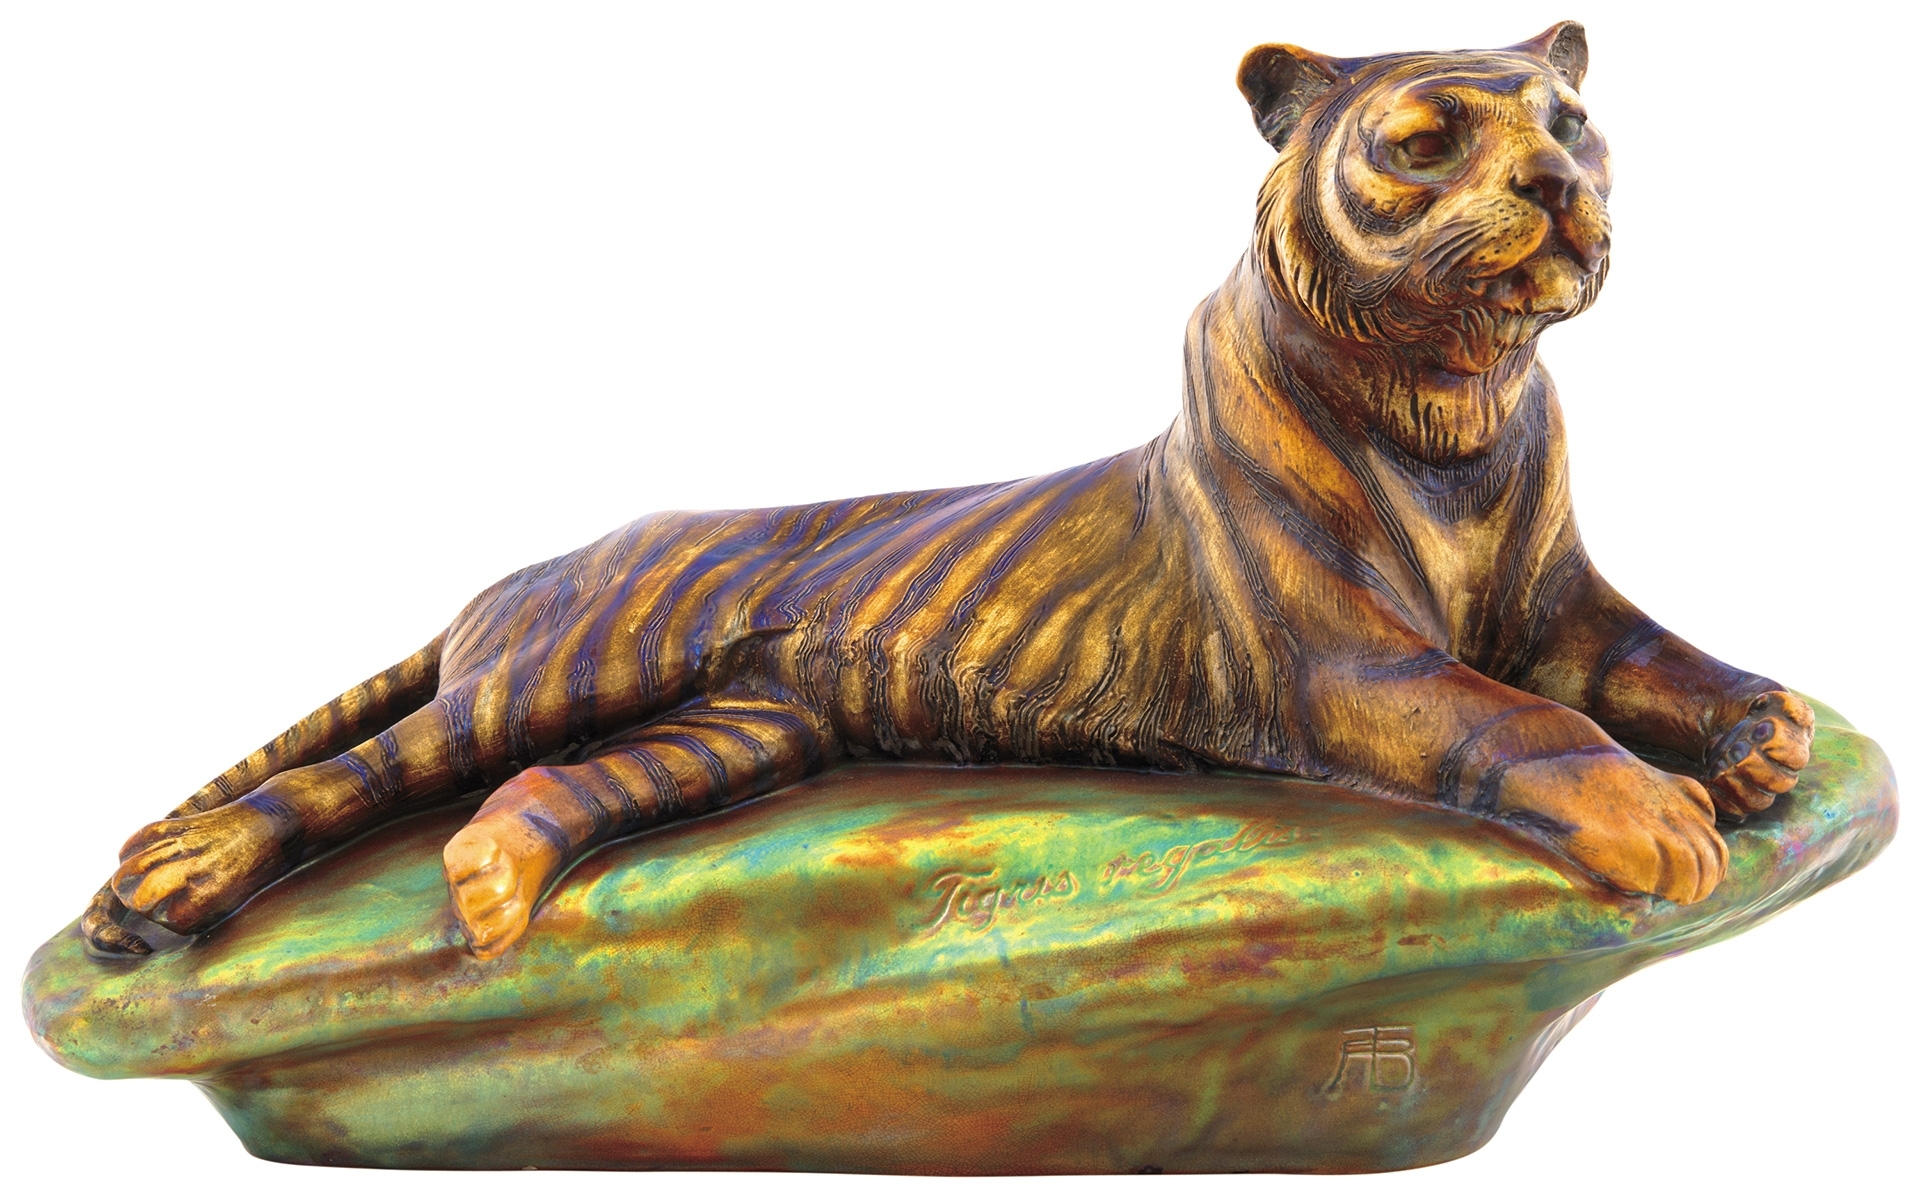 Zsolnay Plasztika, bengáli tigris, Zsolnay, 1900